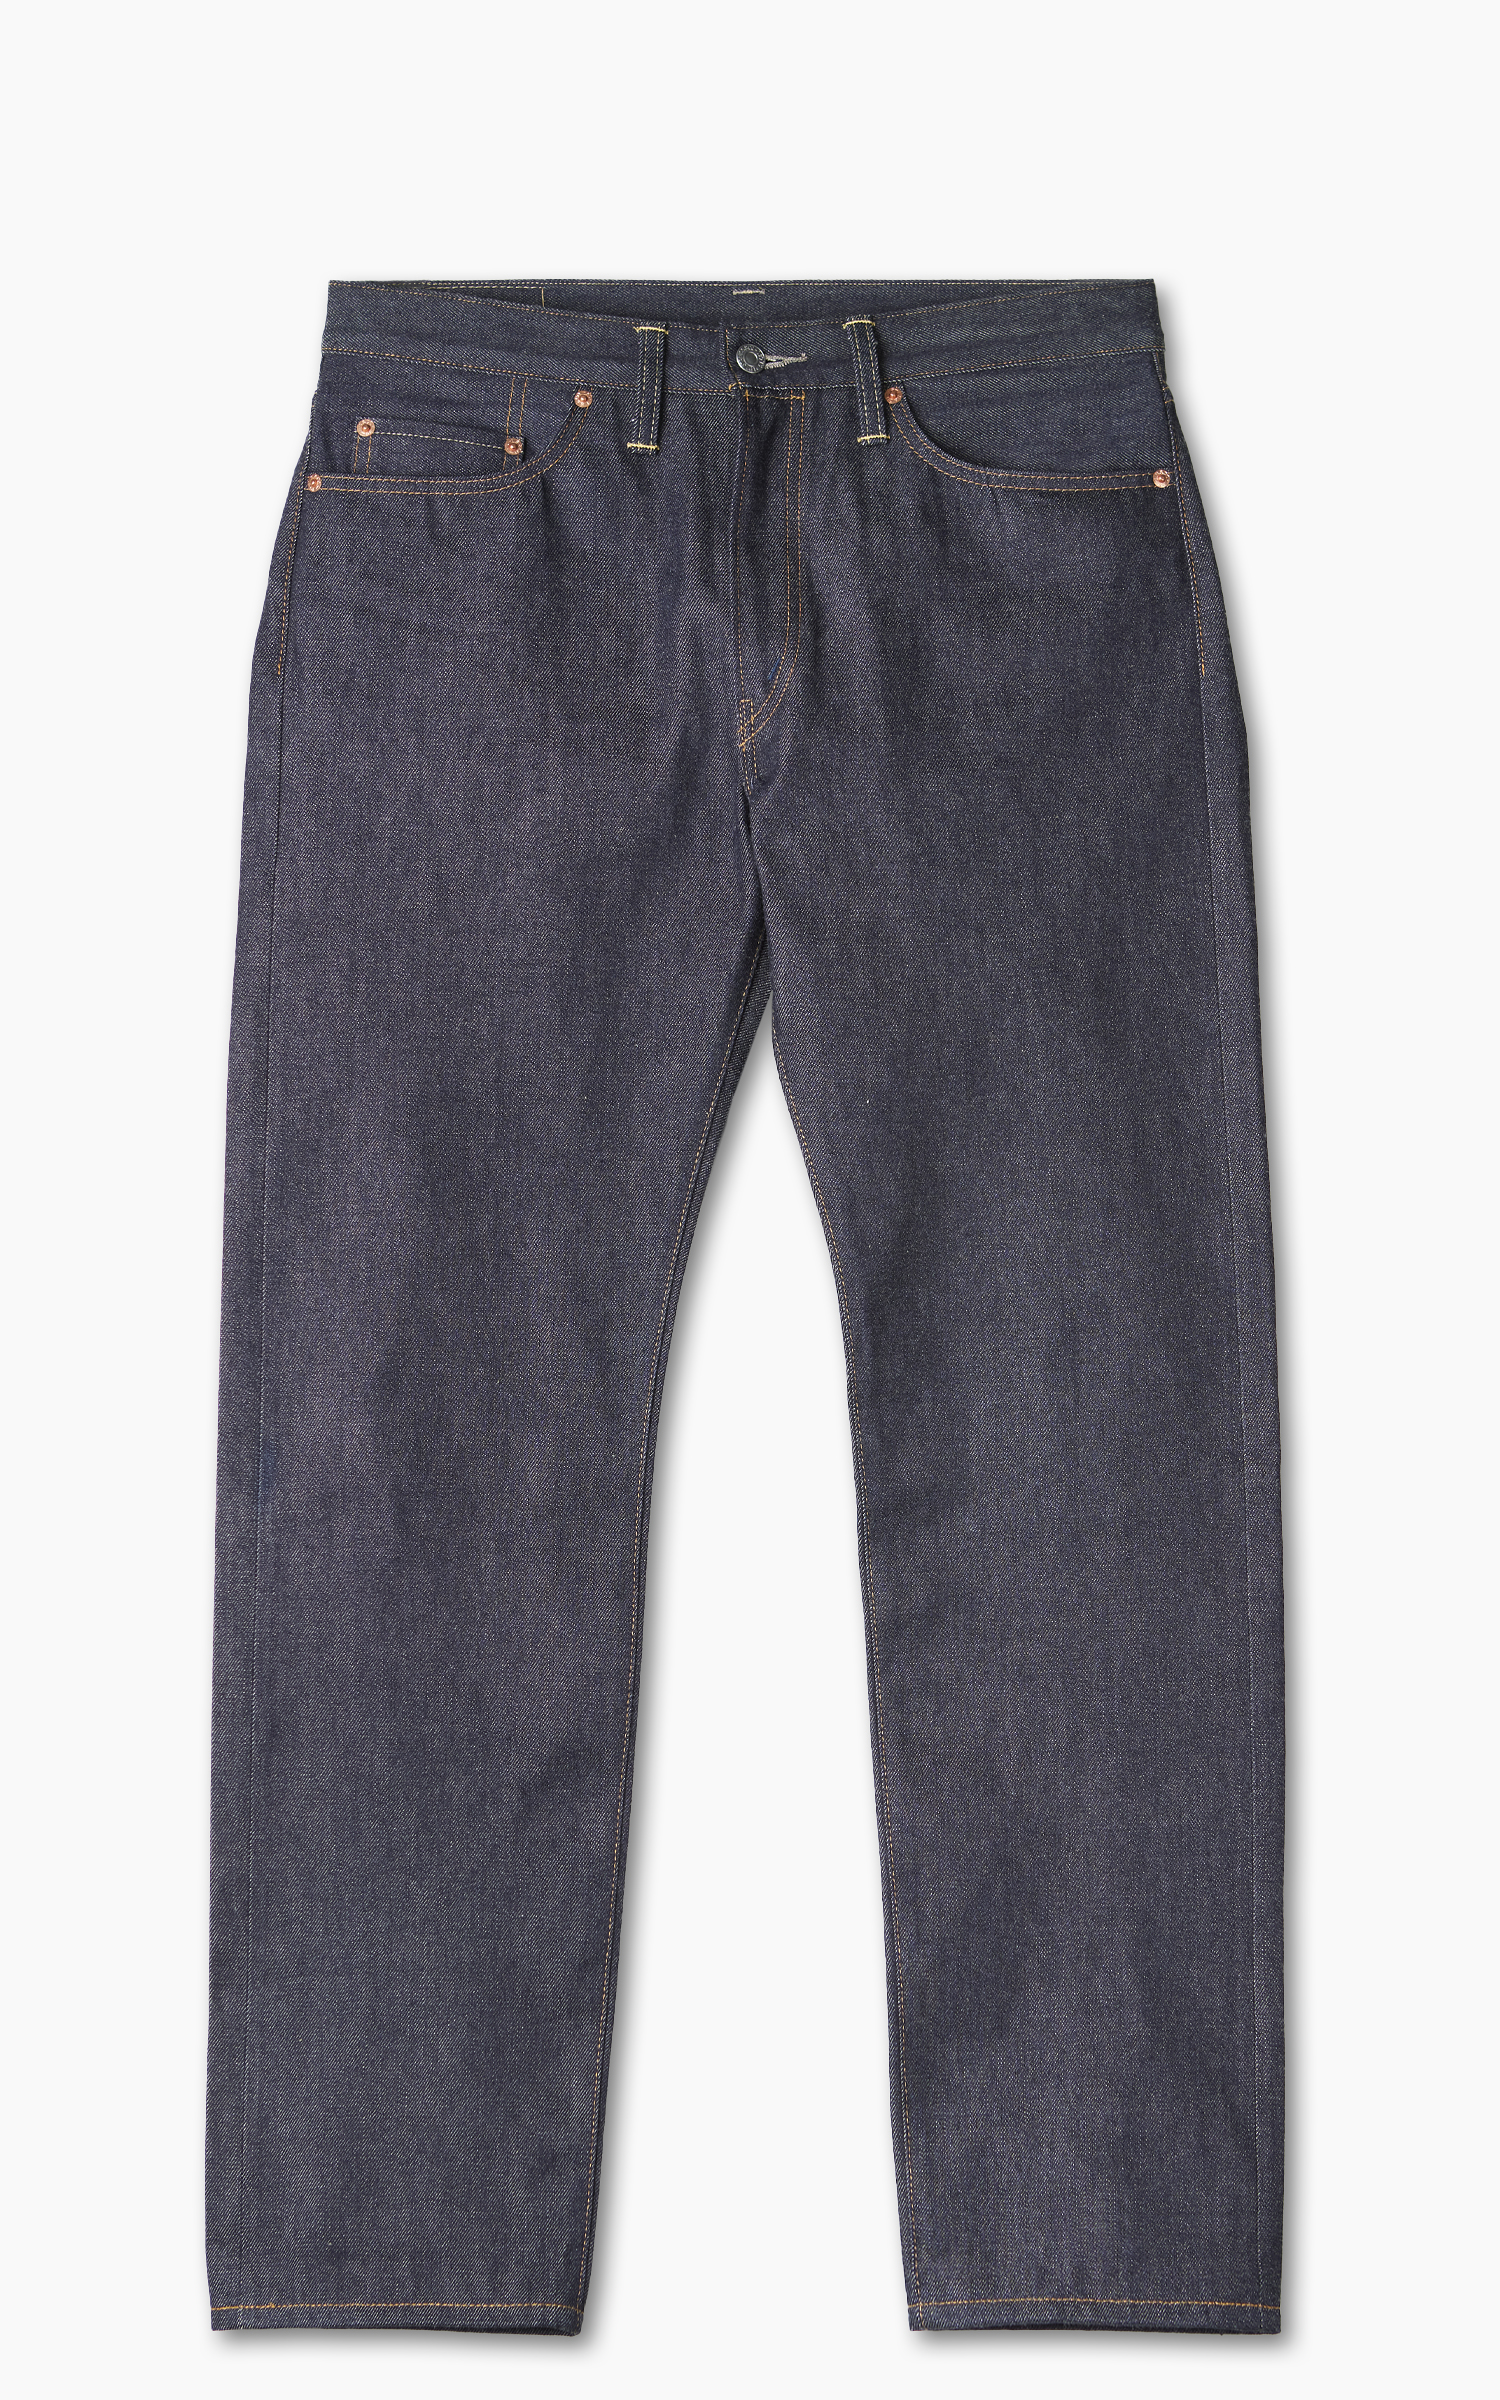 Levi's Vintage Clothing - 1954 501 Original Selvedge-Denim Jeans - Blue  Levi's Vintage